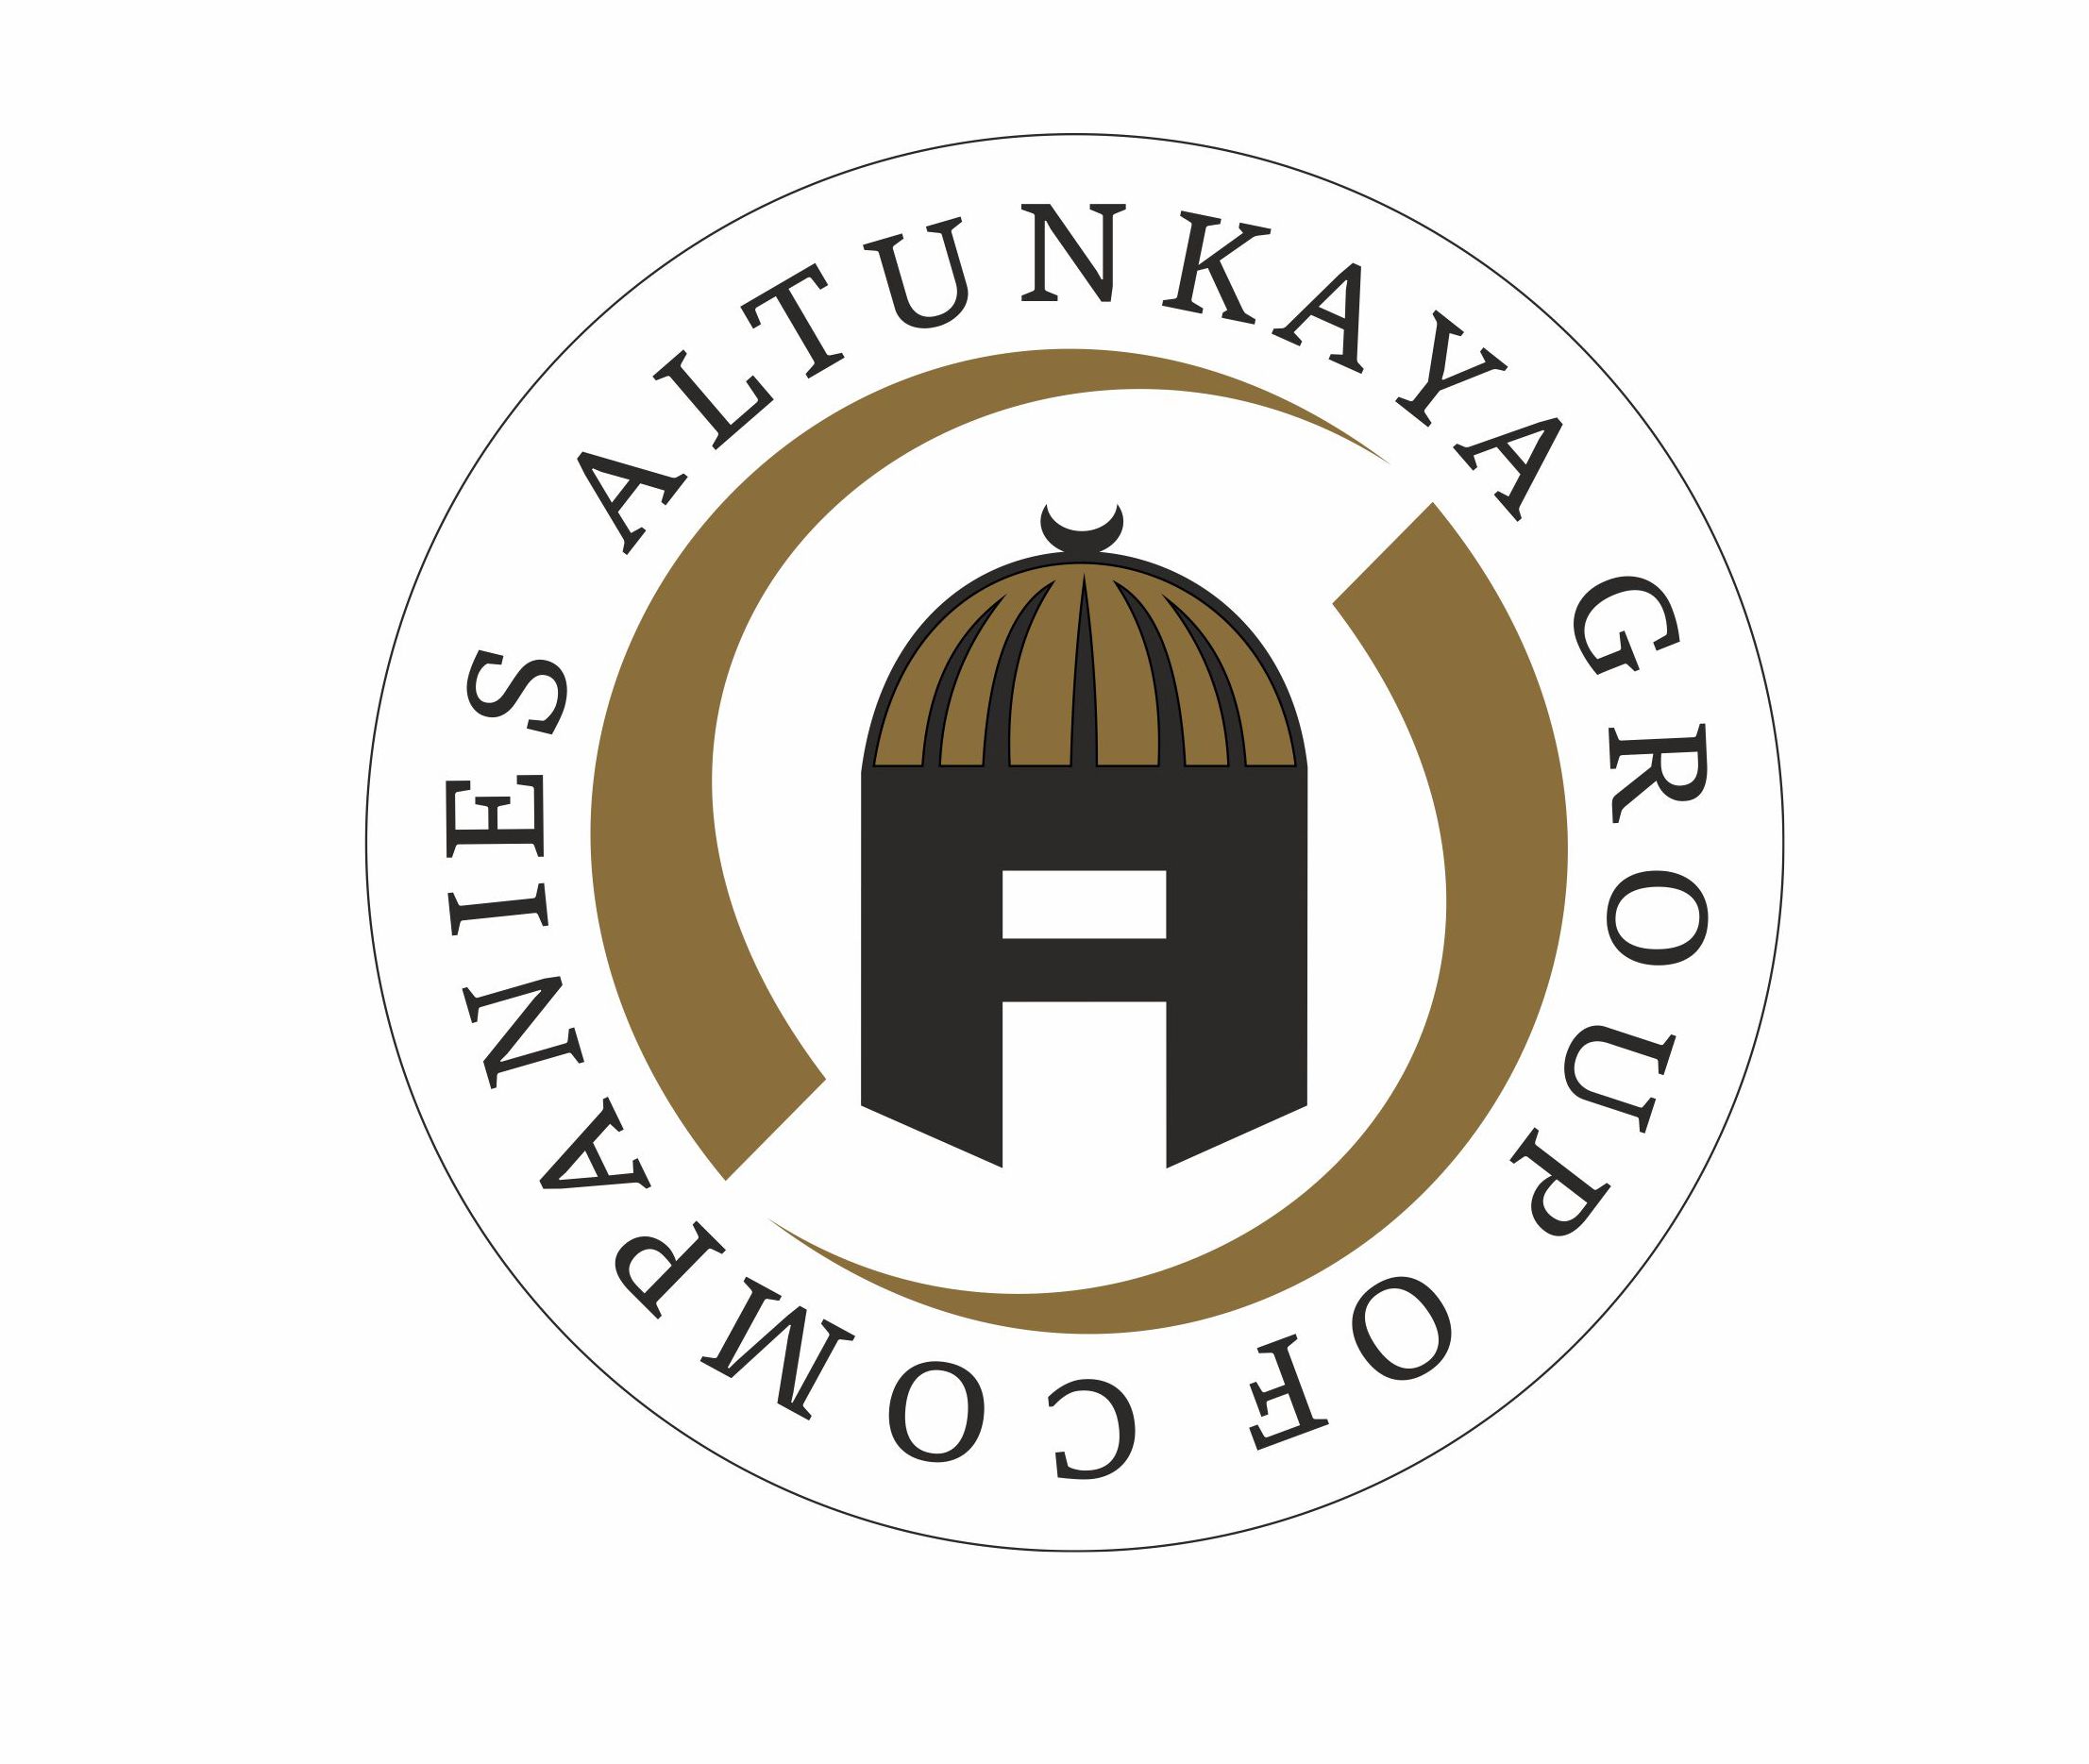 Altunkaya Group